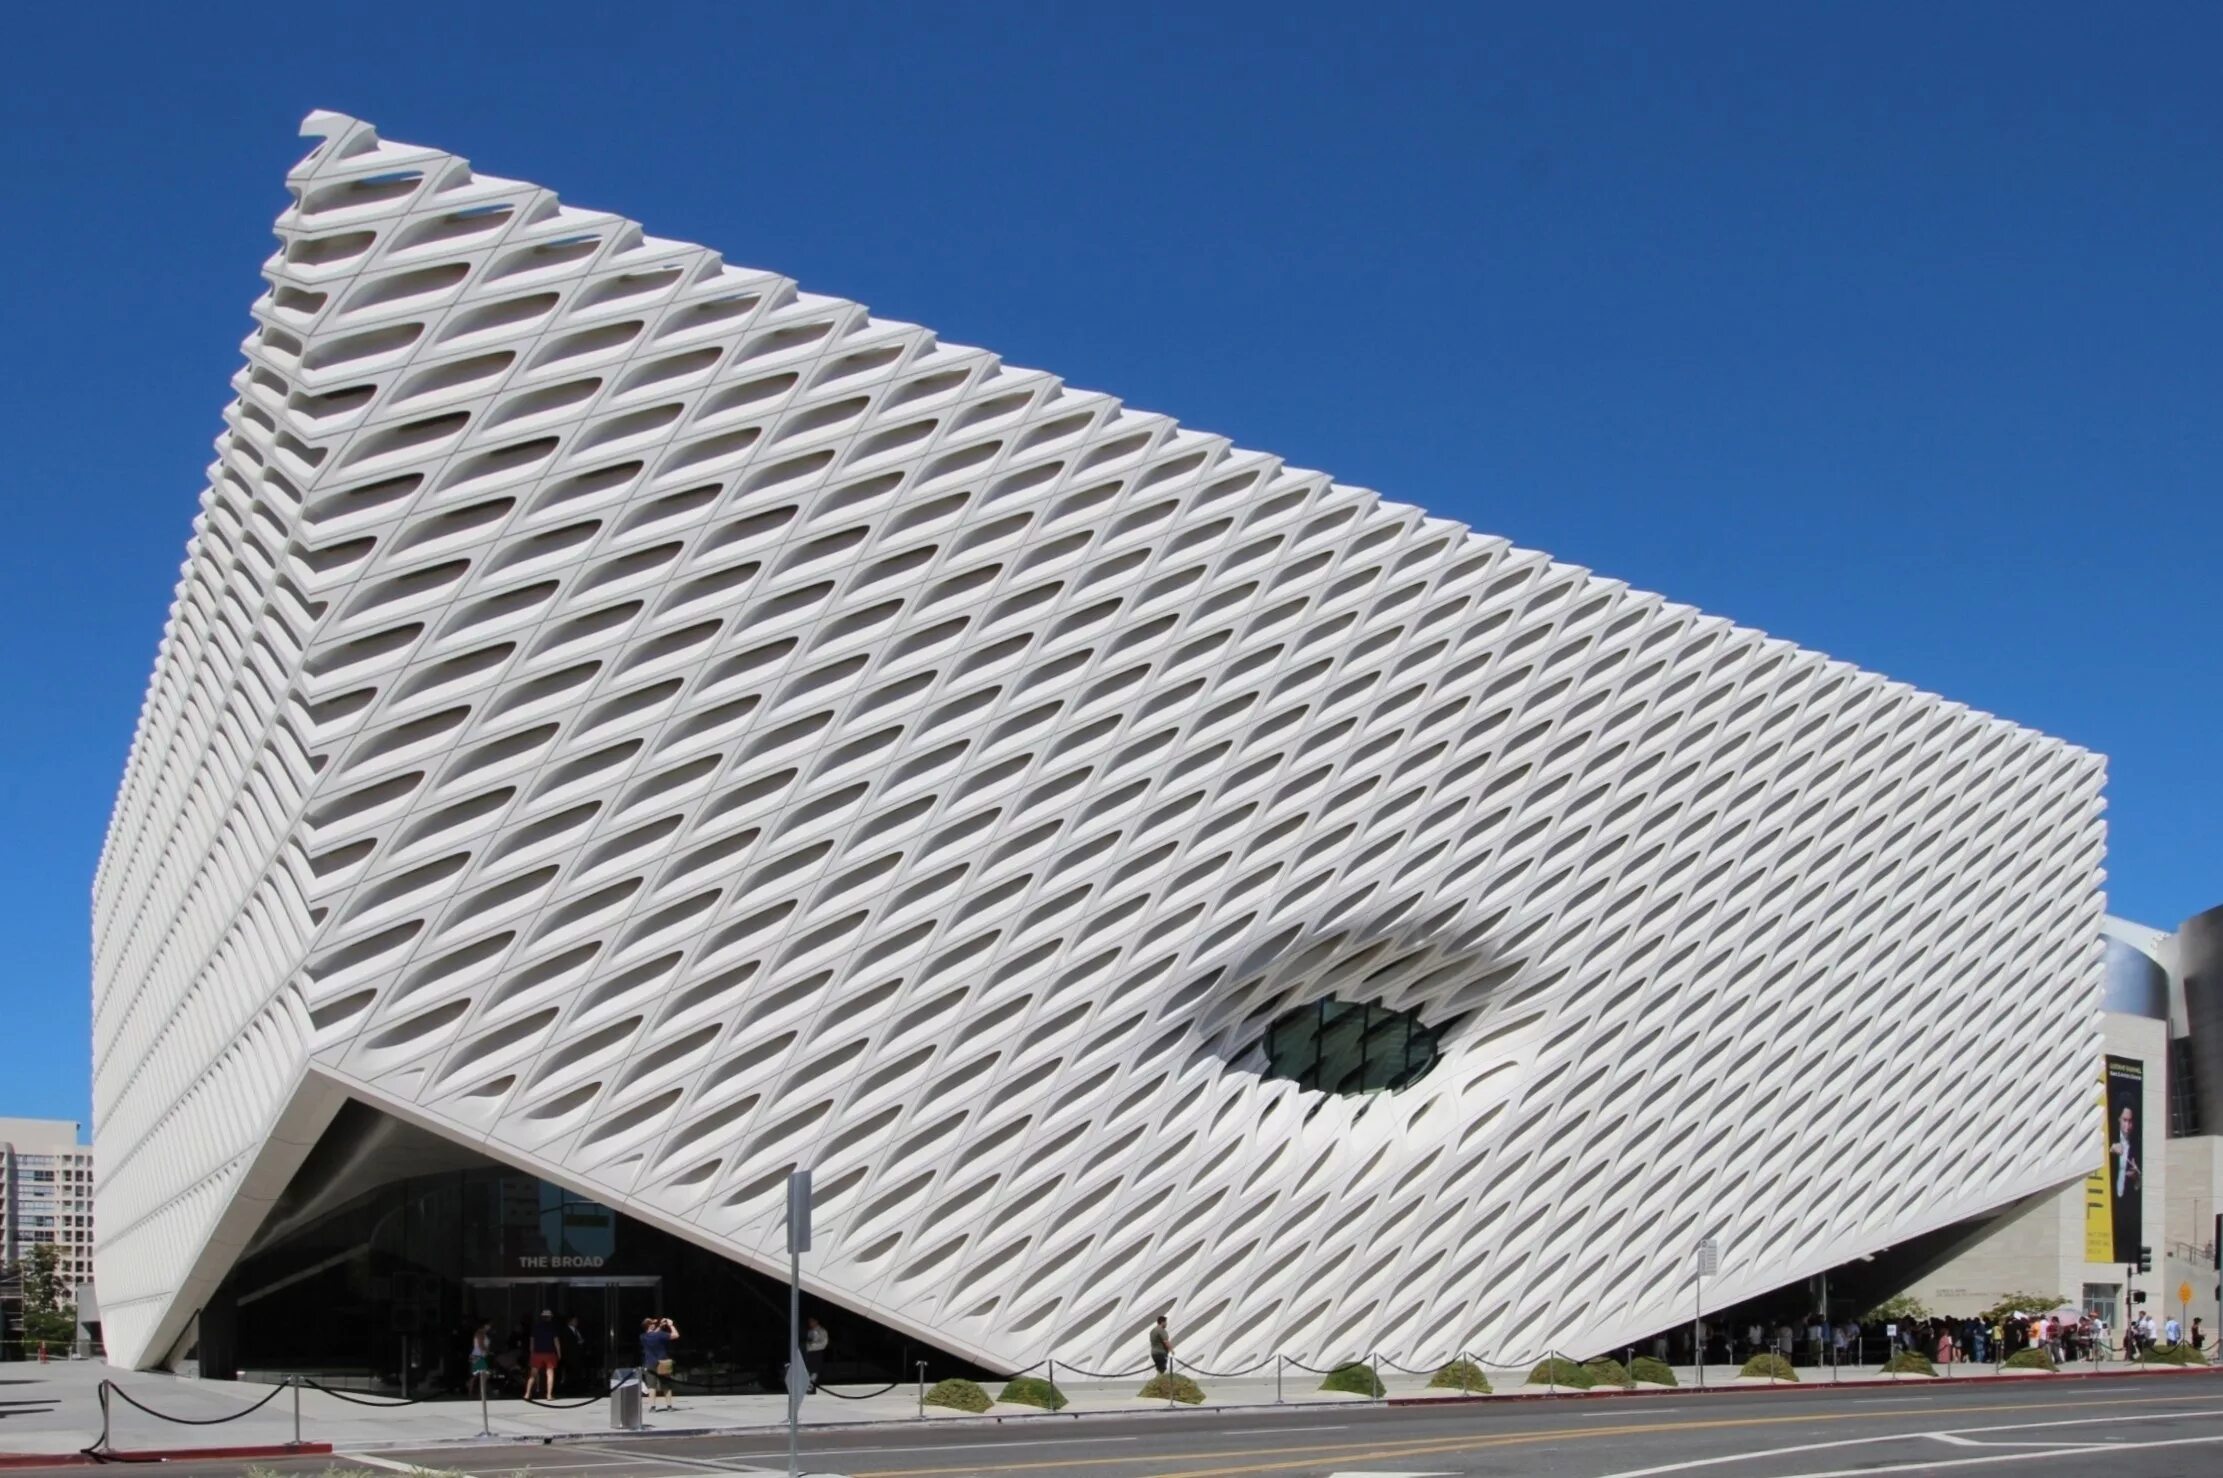 The broad Museum Лос-Анджелес. Glass Fiber reinforced Concrete. GFRC (Glass Fiber reinforced Concrete) Projects by Willis Construction. Архитектурный бетон фибробетон.